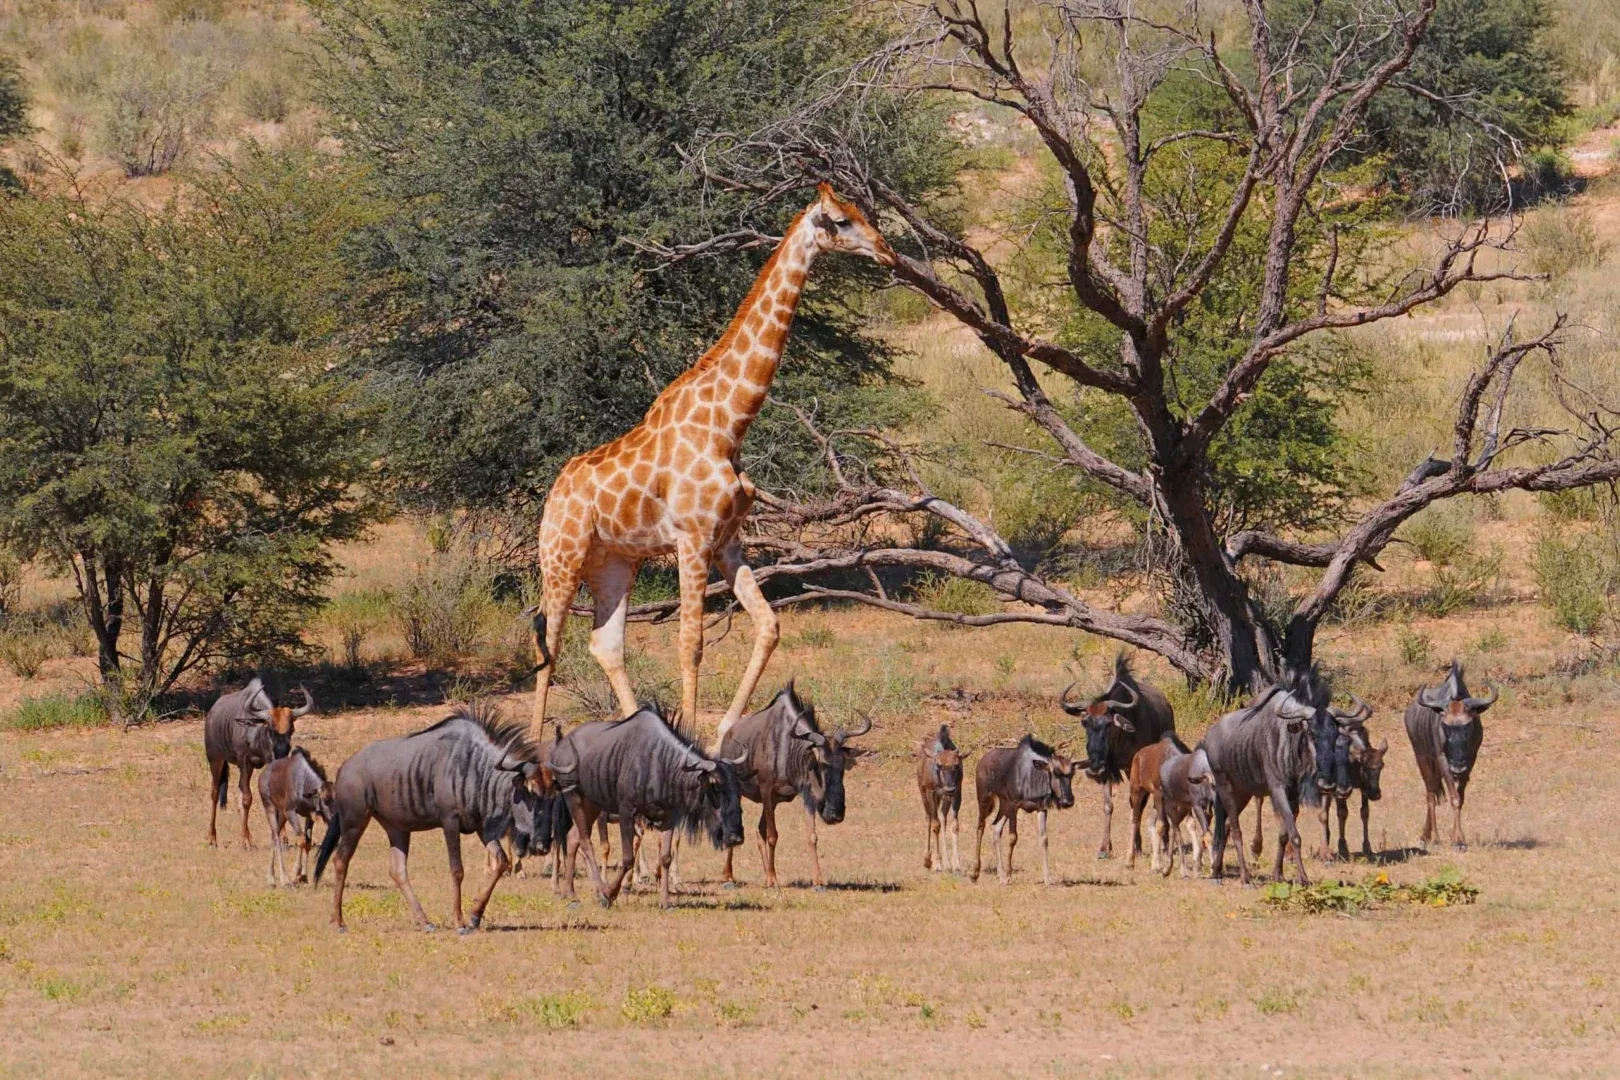 Kgalagadi Transfrontier Park giraffe and wildlife